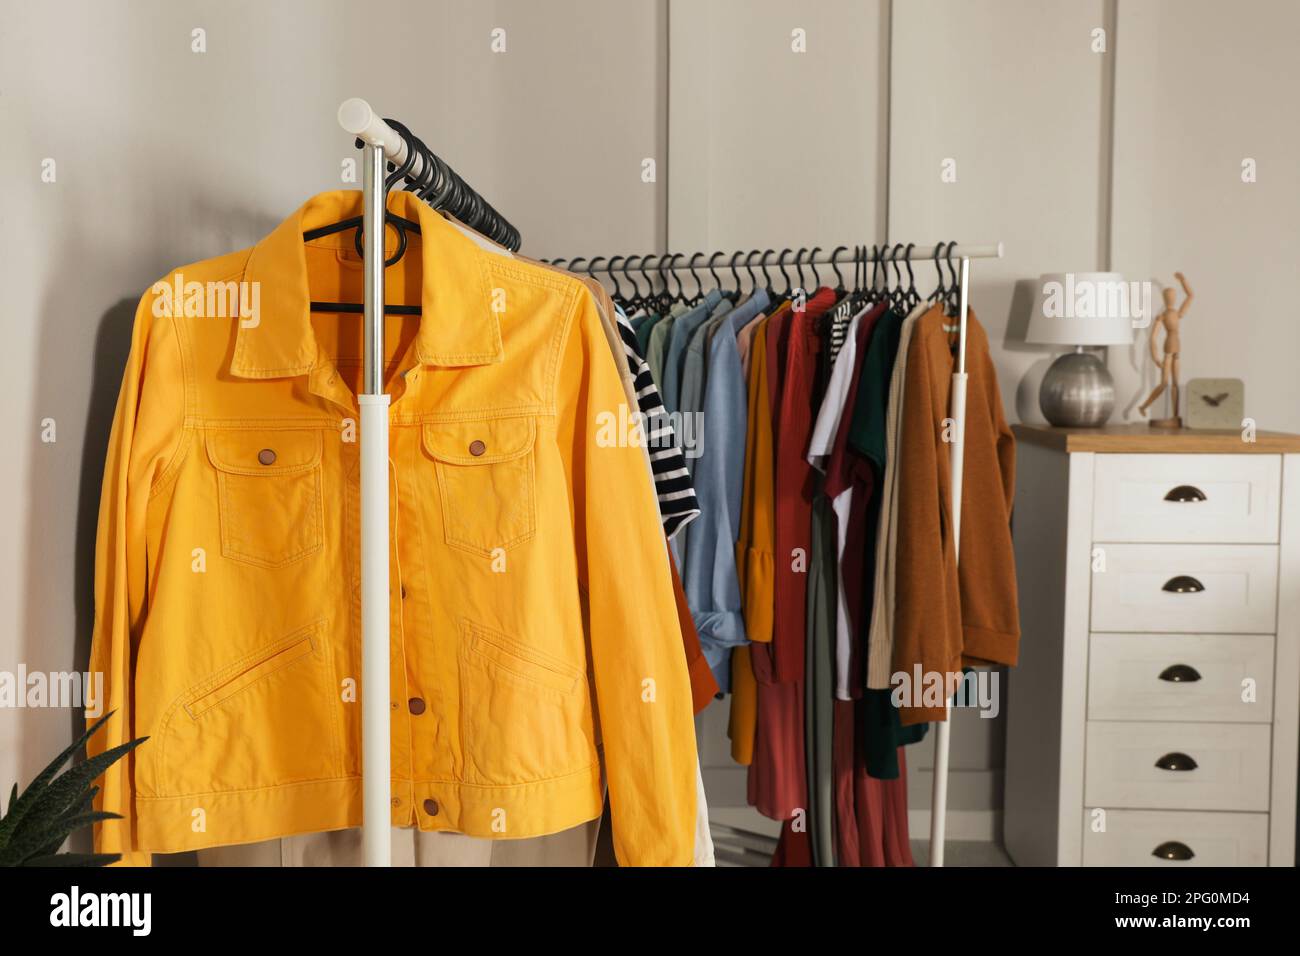 Racks with stylish clothes indoors. Fast fashion Stock Photo